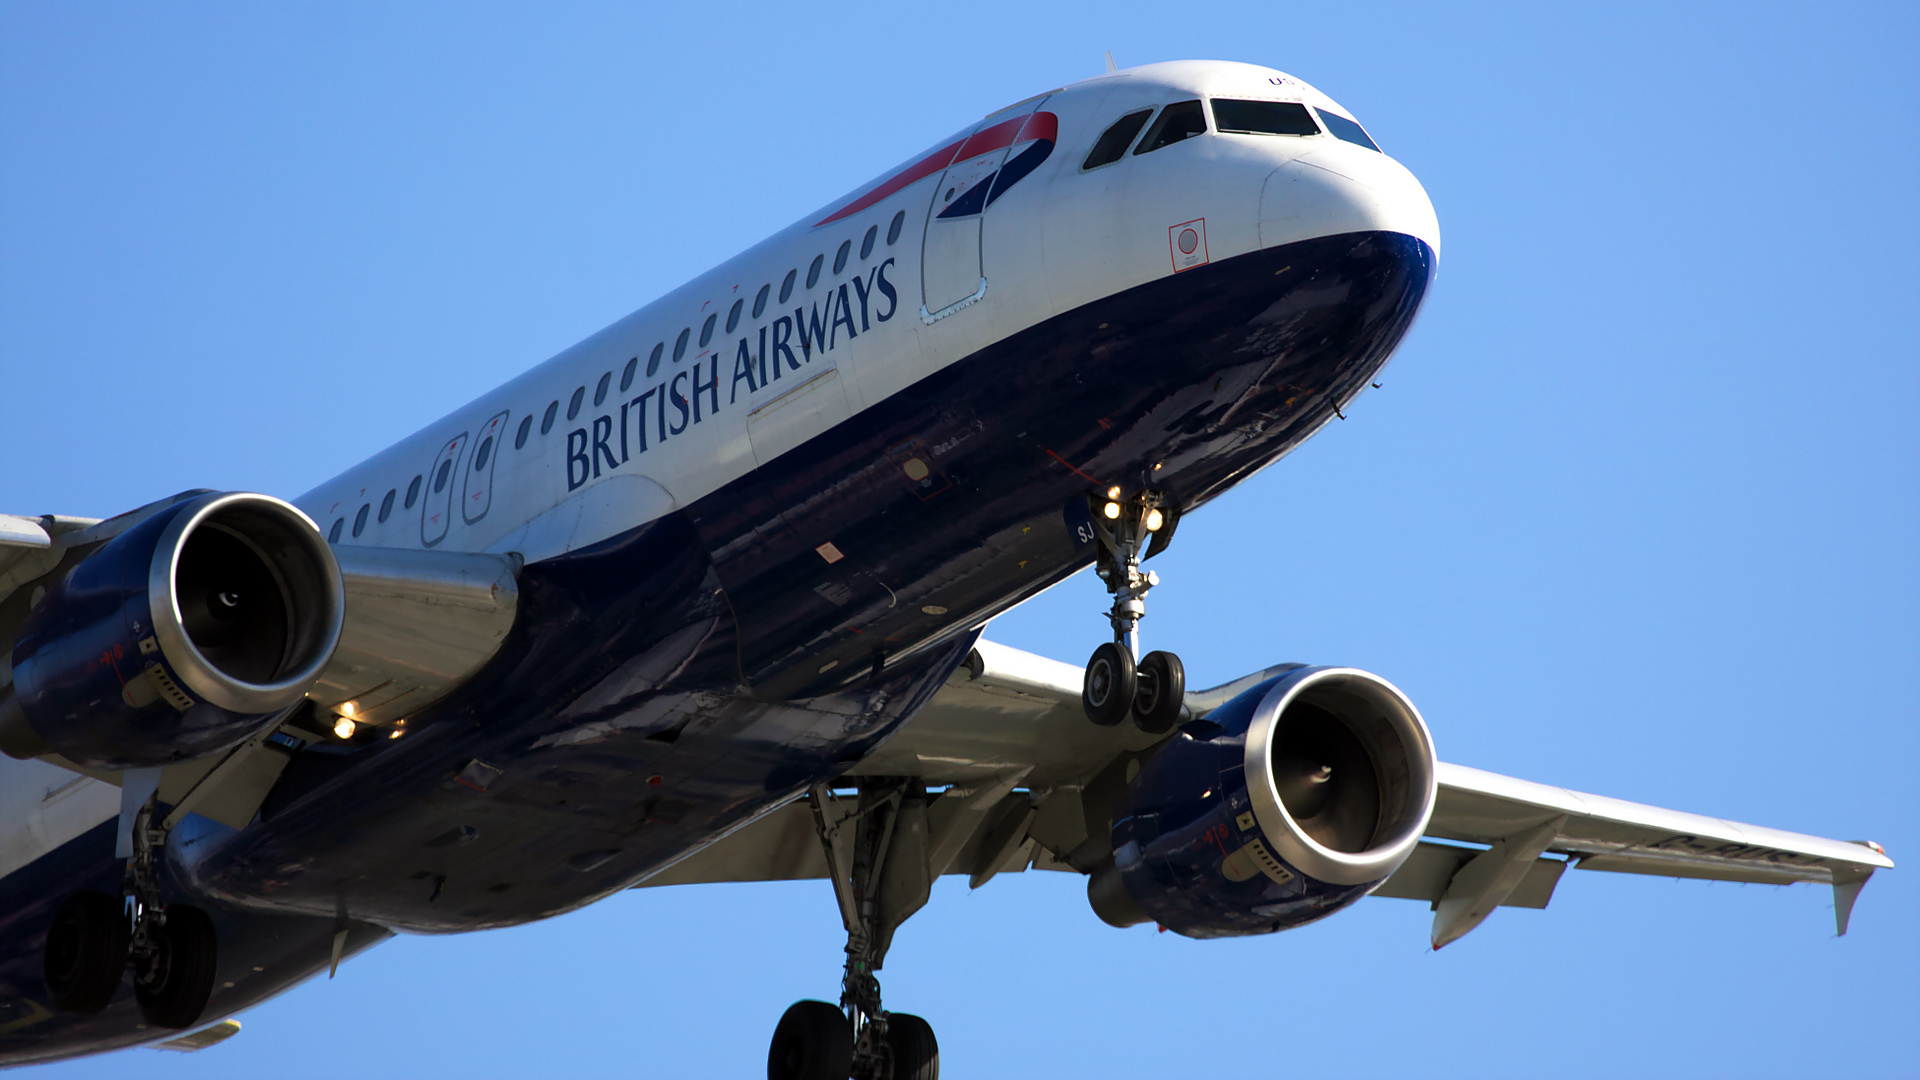 G-BUSJ ✈ British Airways Airbus A320-211 @ London-Heathrow